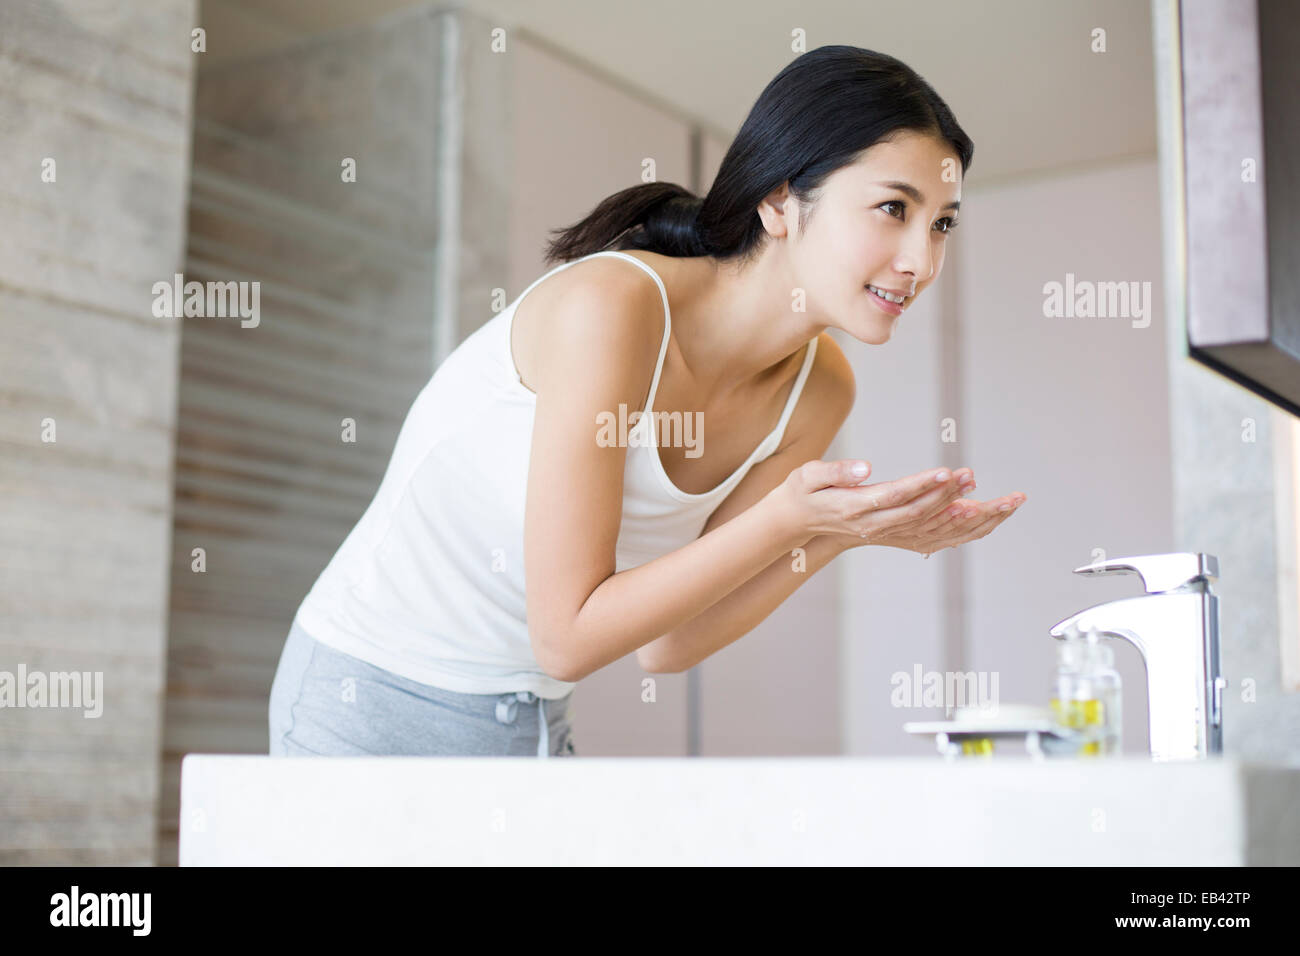 Young woman washing face Stock Photo